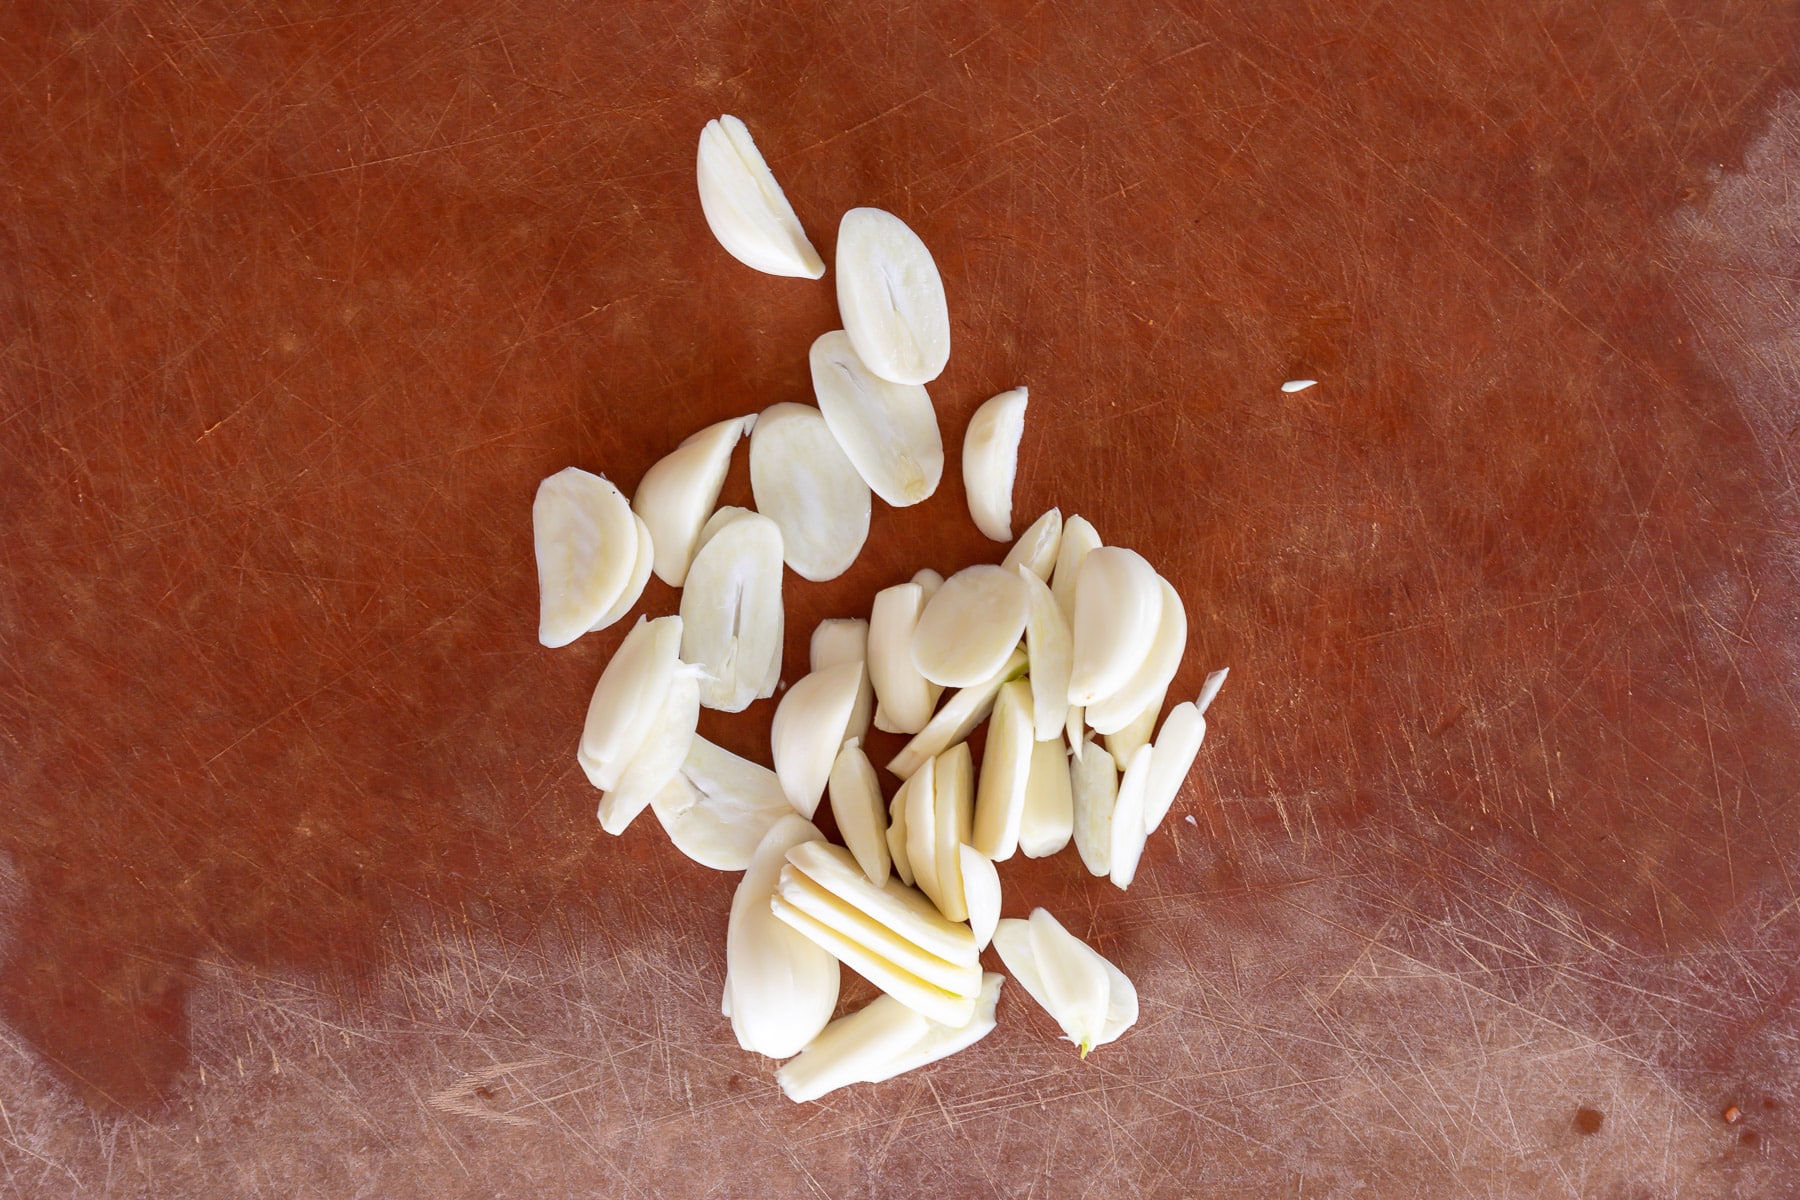 Slivered Garlic